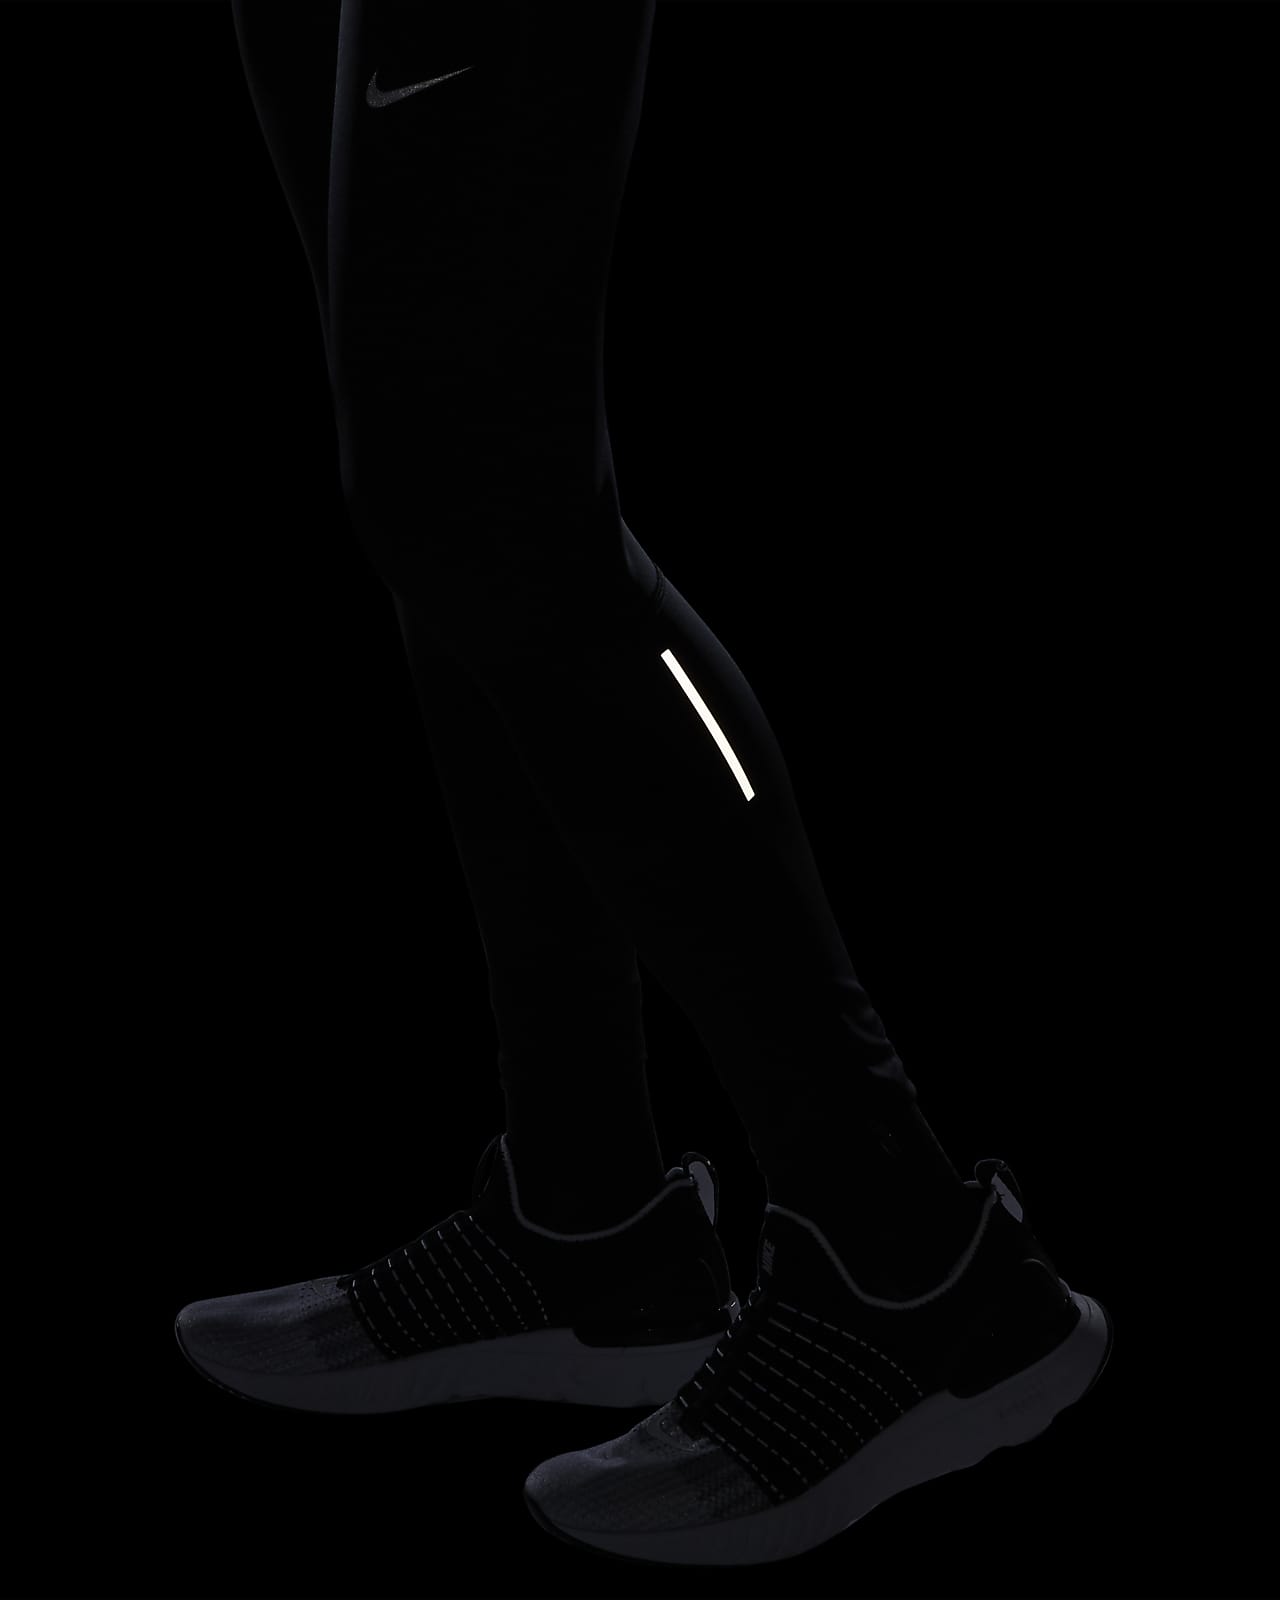 Nike Dri-FIT Challenger Men's Running Tights